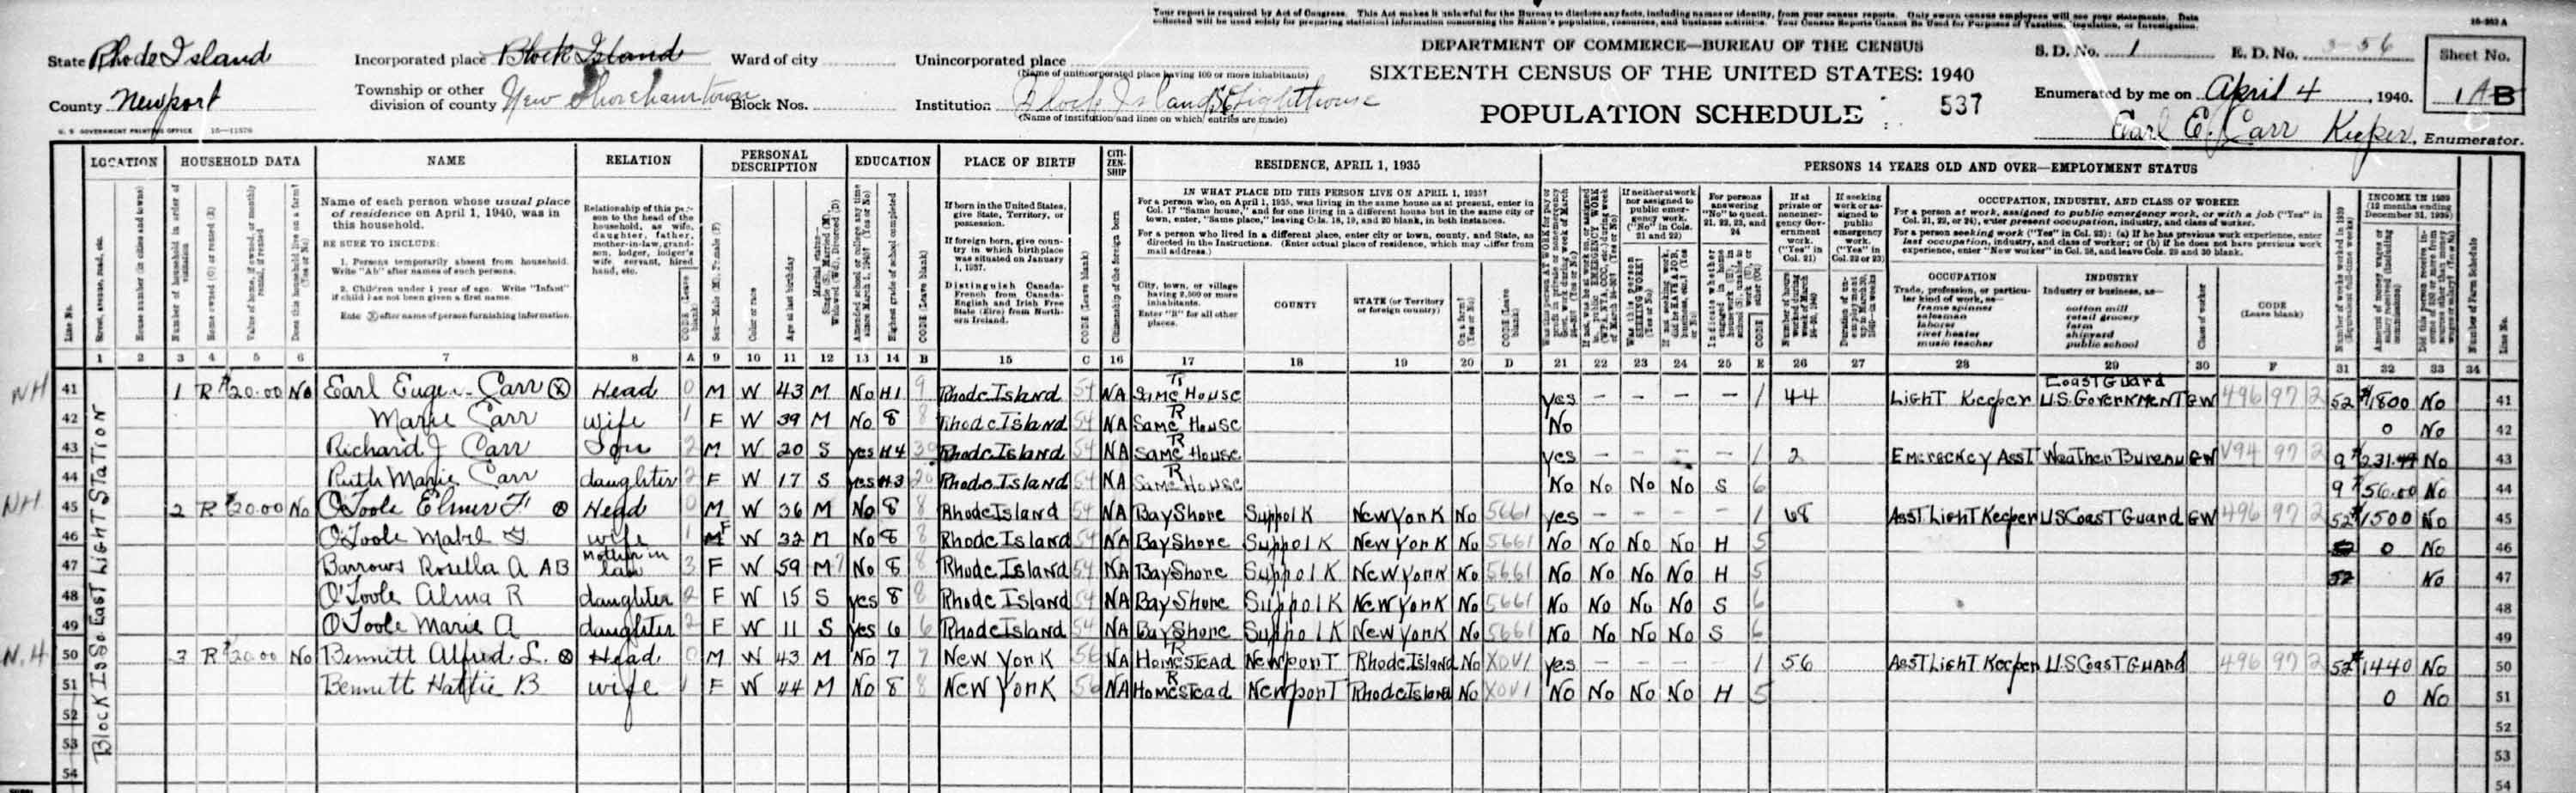 Block Island Southeast Lighthouse 1940 Census